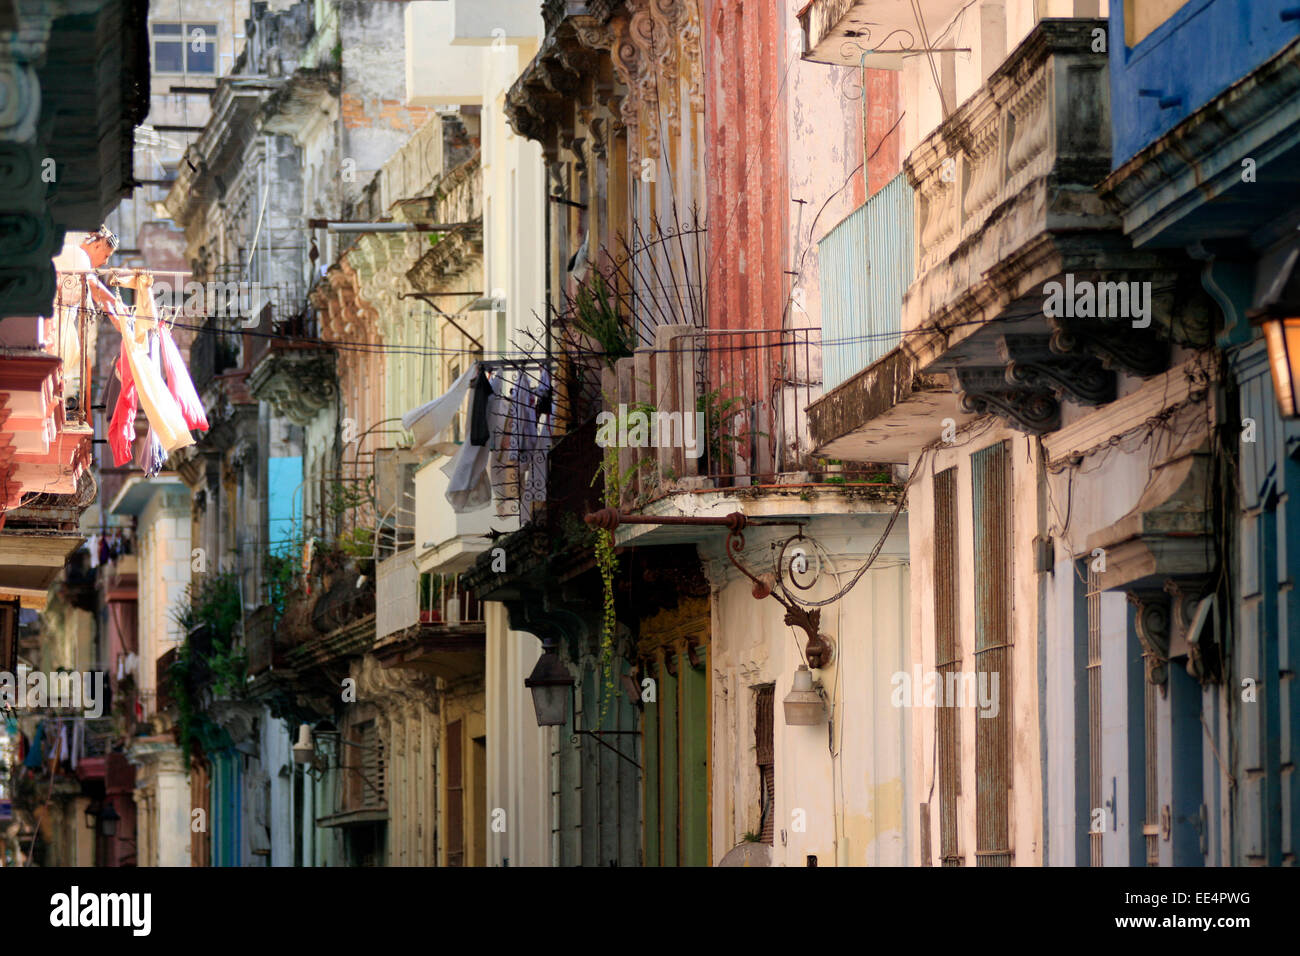 A colorful street in Cuba's capital city, Havana Stock Photo